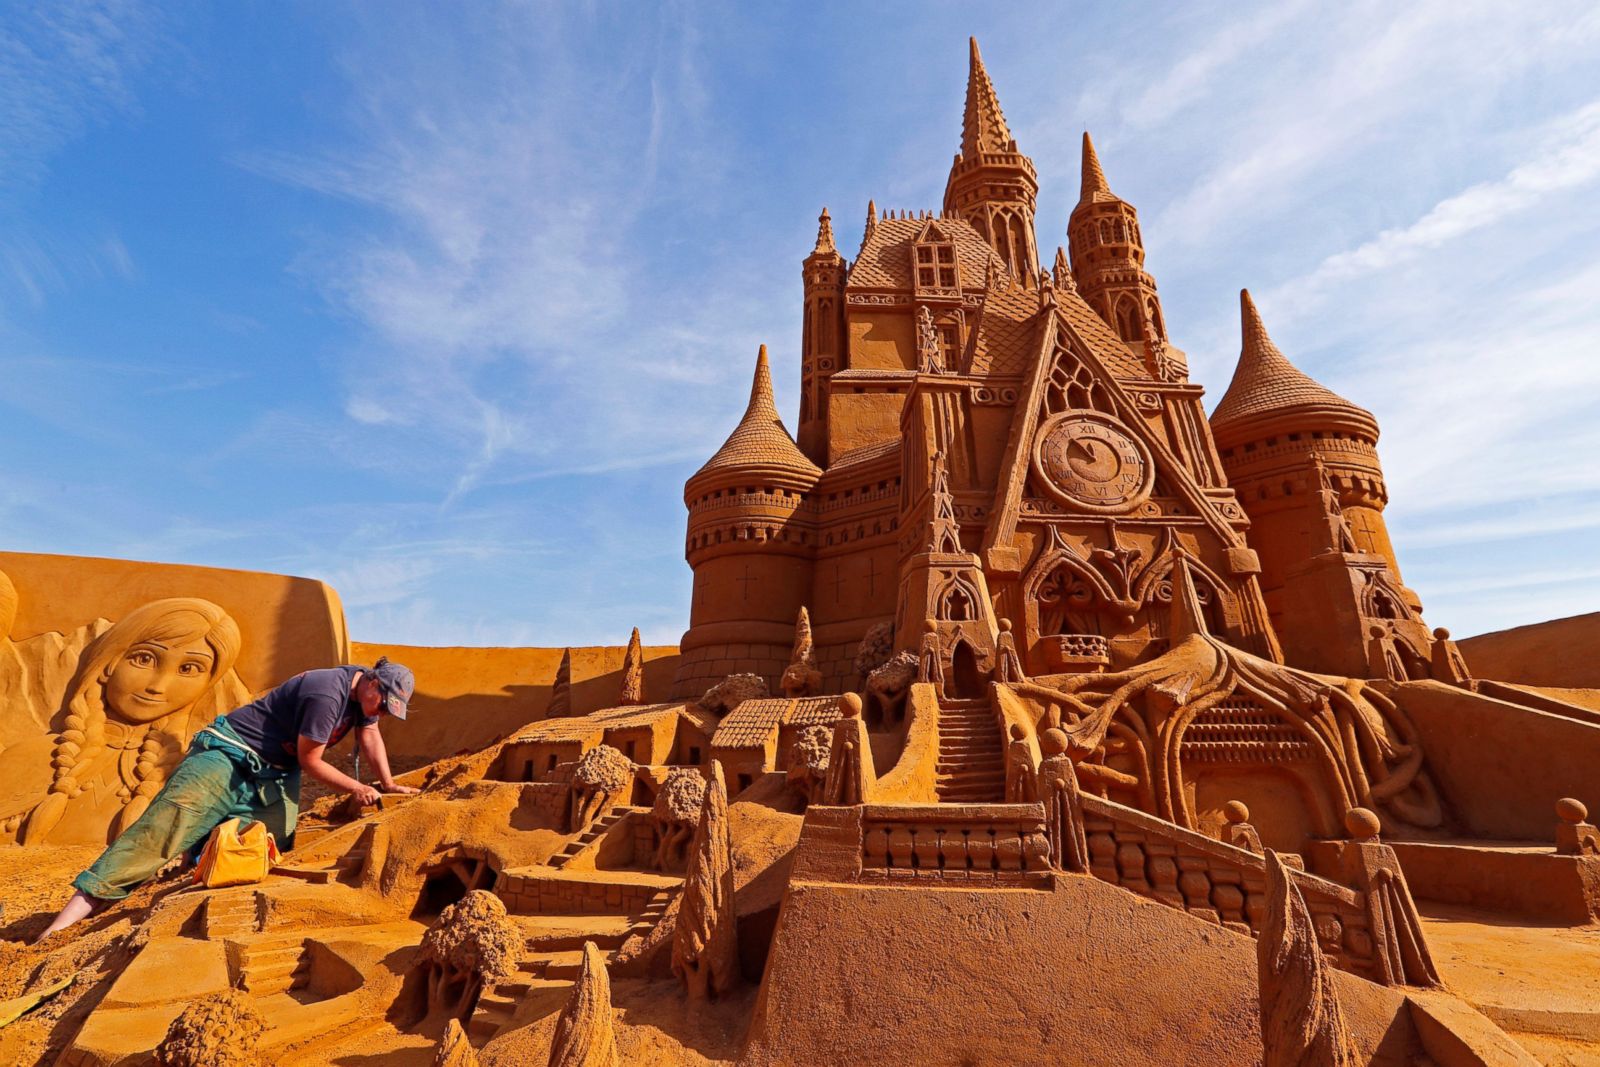 Summer dreams come true: Spectacular Disney sand sculptures - ABC News